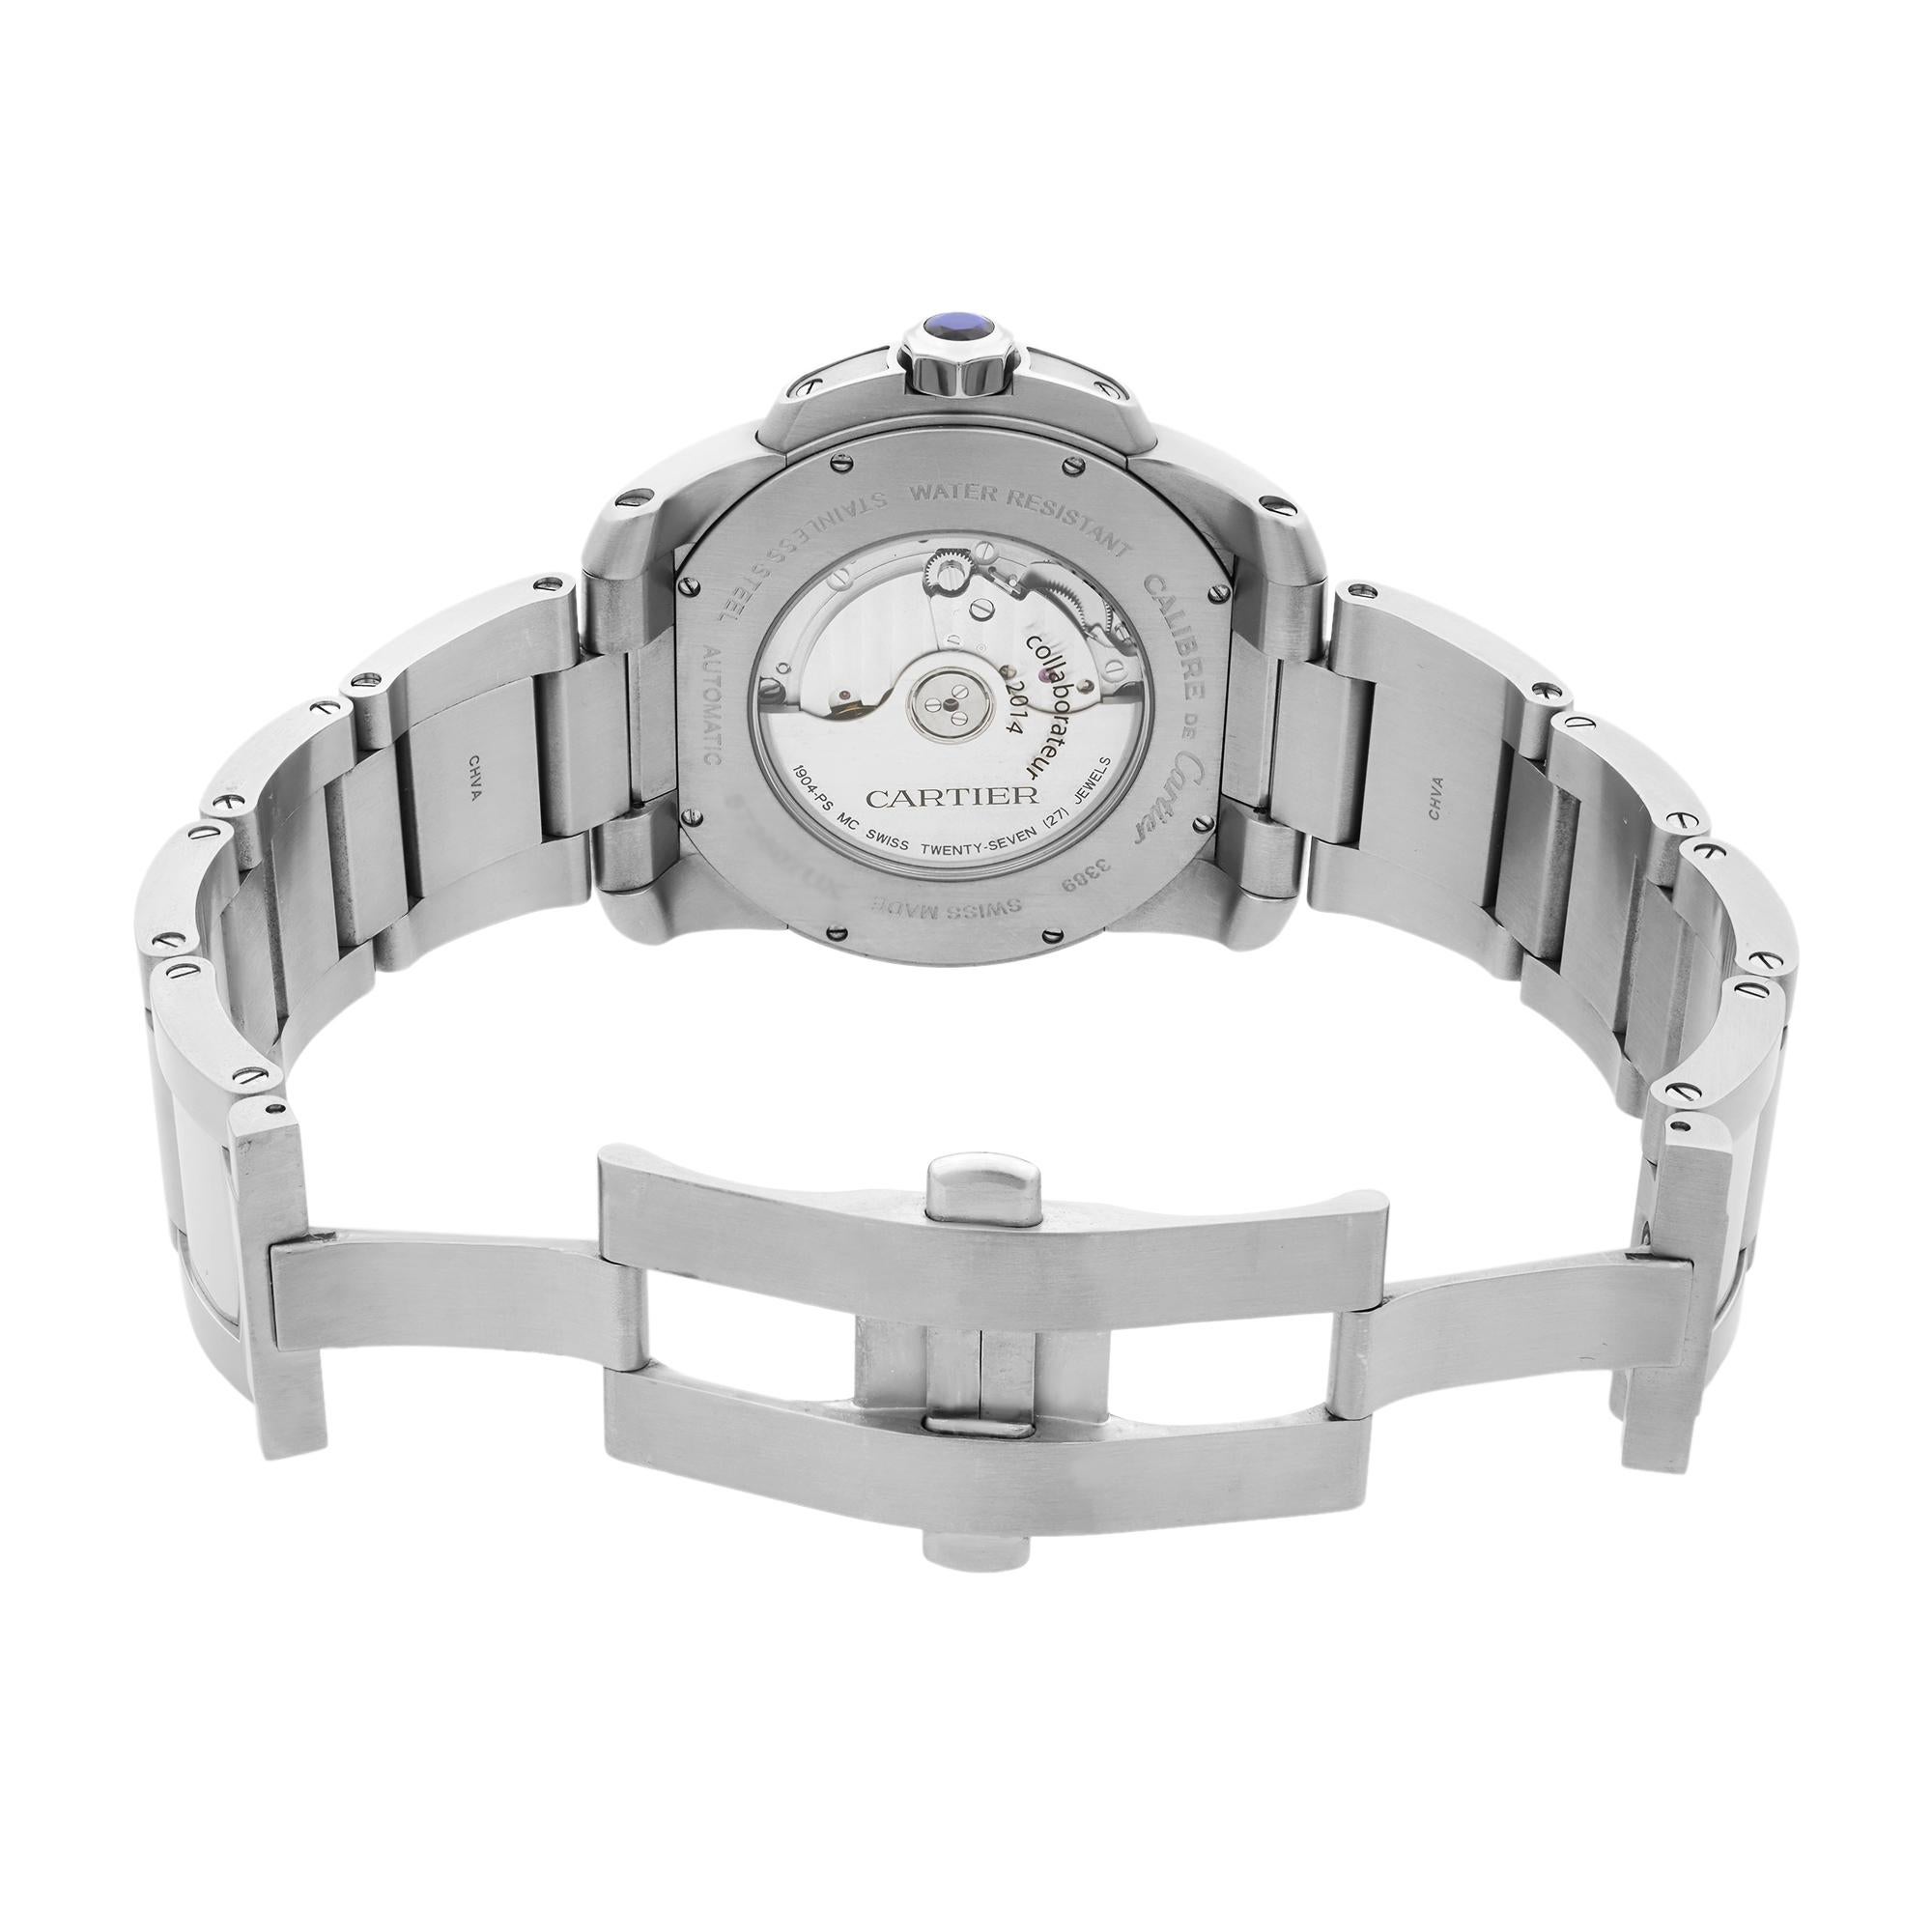 Cartier Calibre de Cartier Steel Silver Dial Automatic Men's Watch W7100015 2